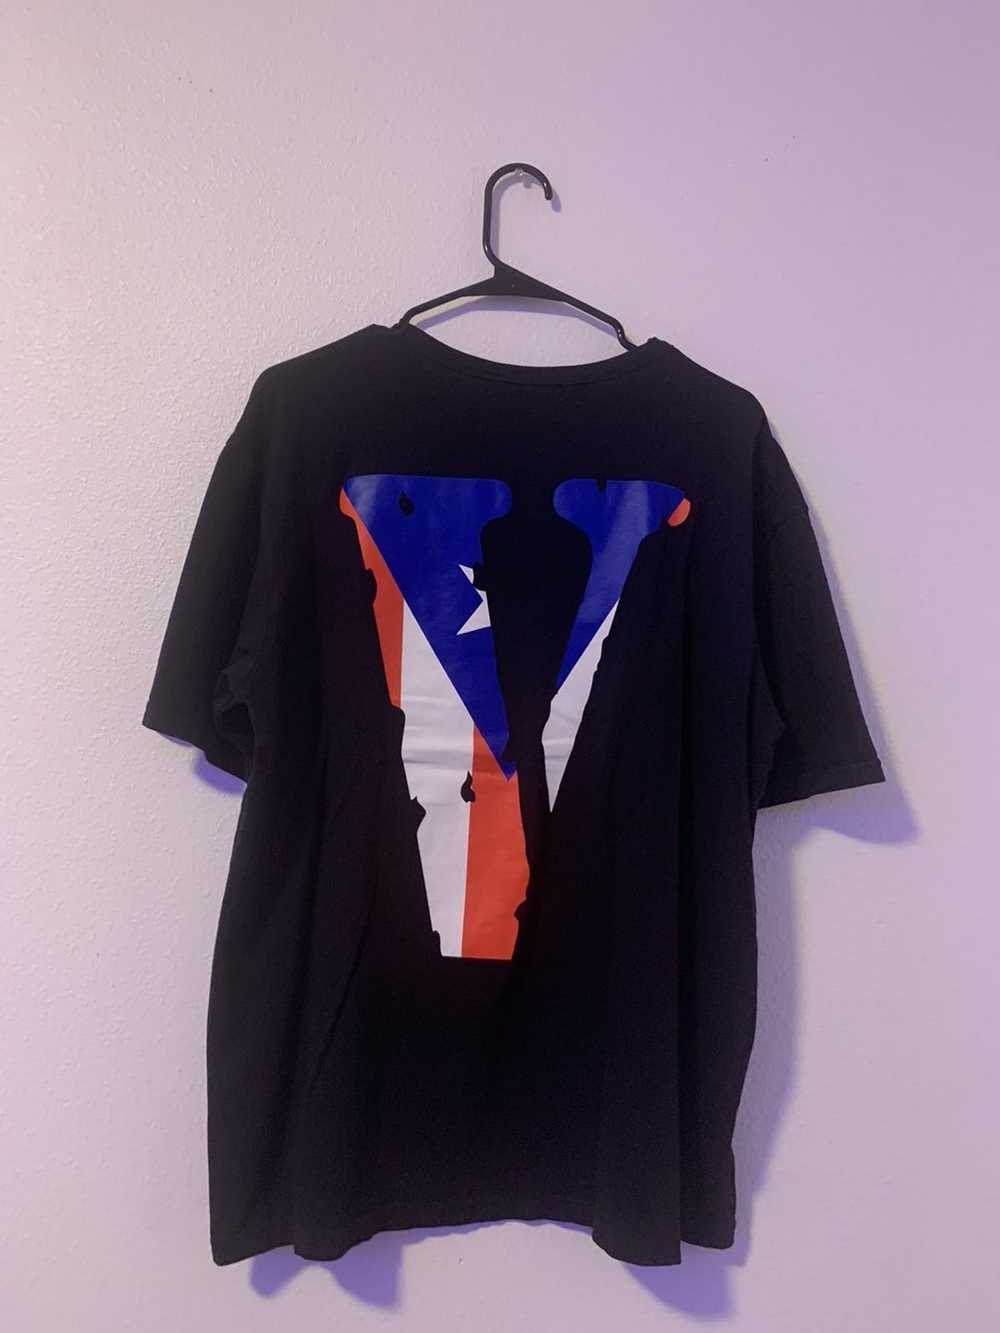 Vlone Vlone “Puerto Rico Flag” Black Tee - image 2